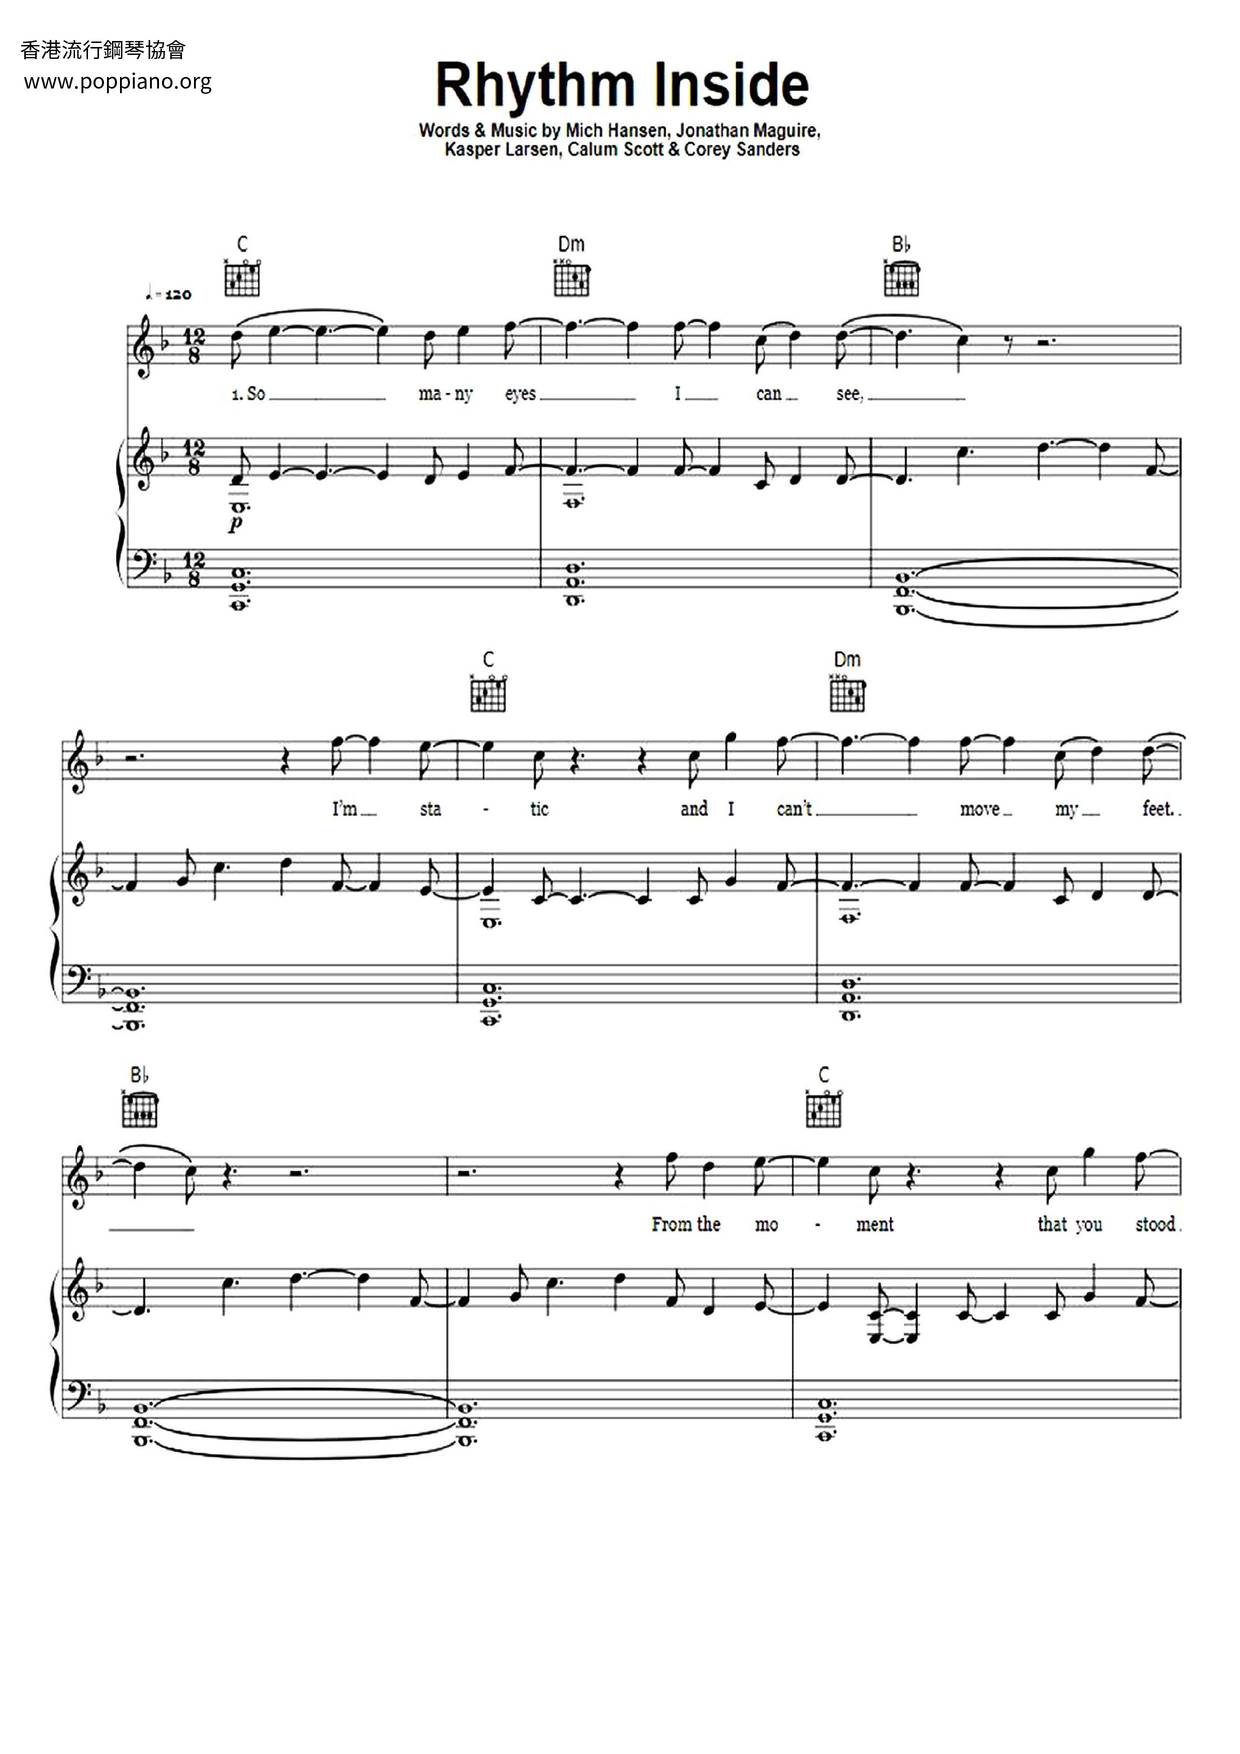 Rhythm Inside Score